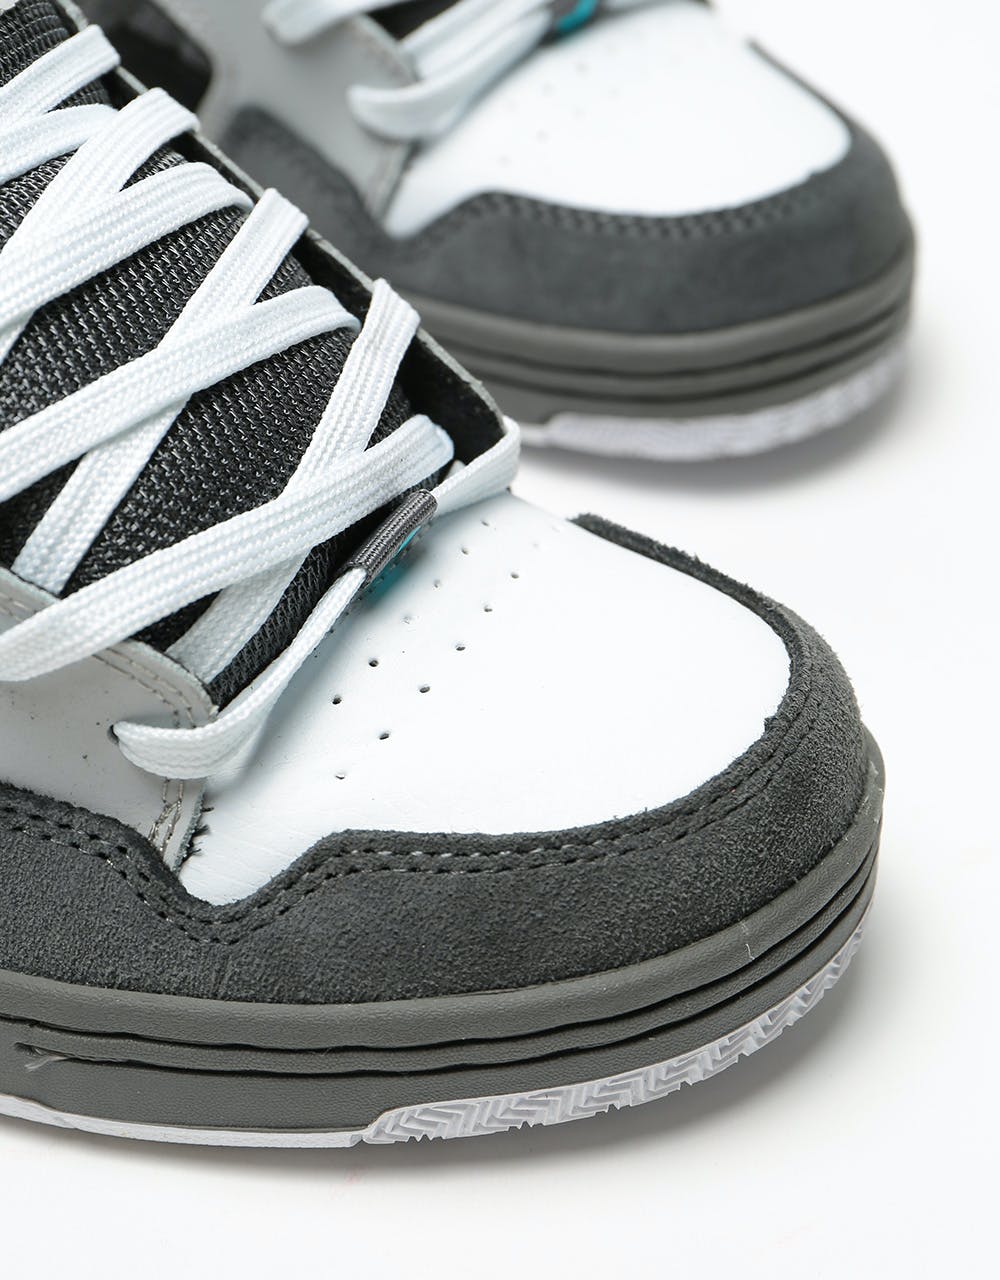 DVS Enduro 125 Skate Shoes - Black/Grey/White Nubuck